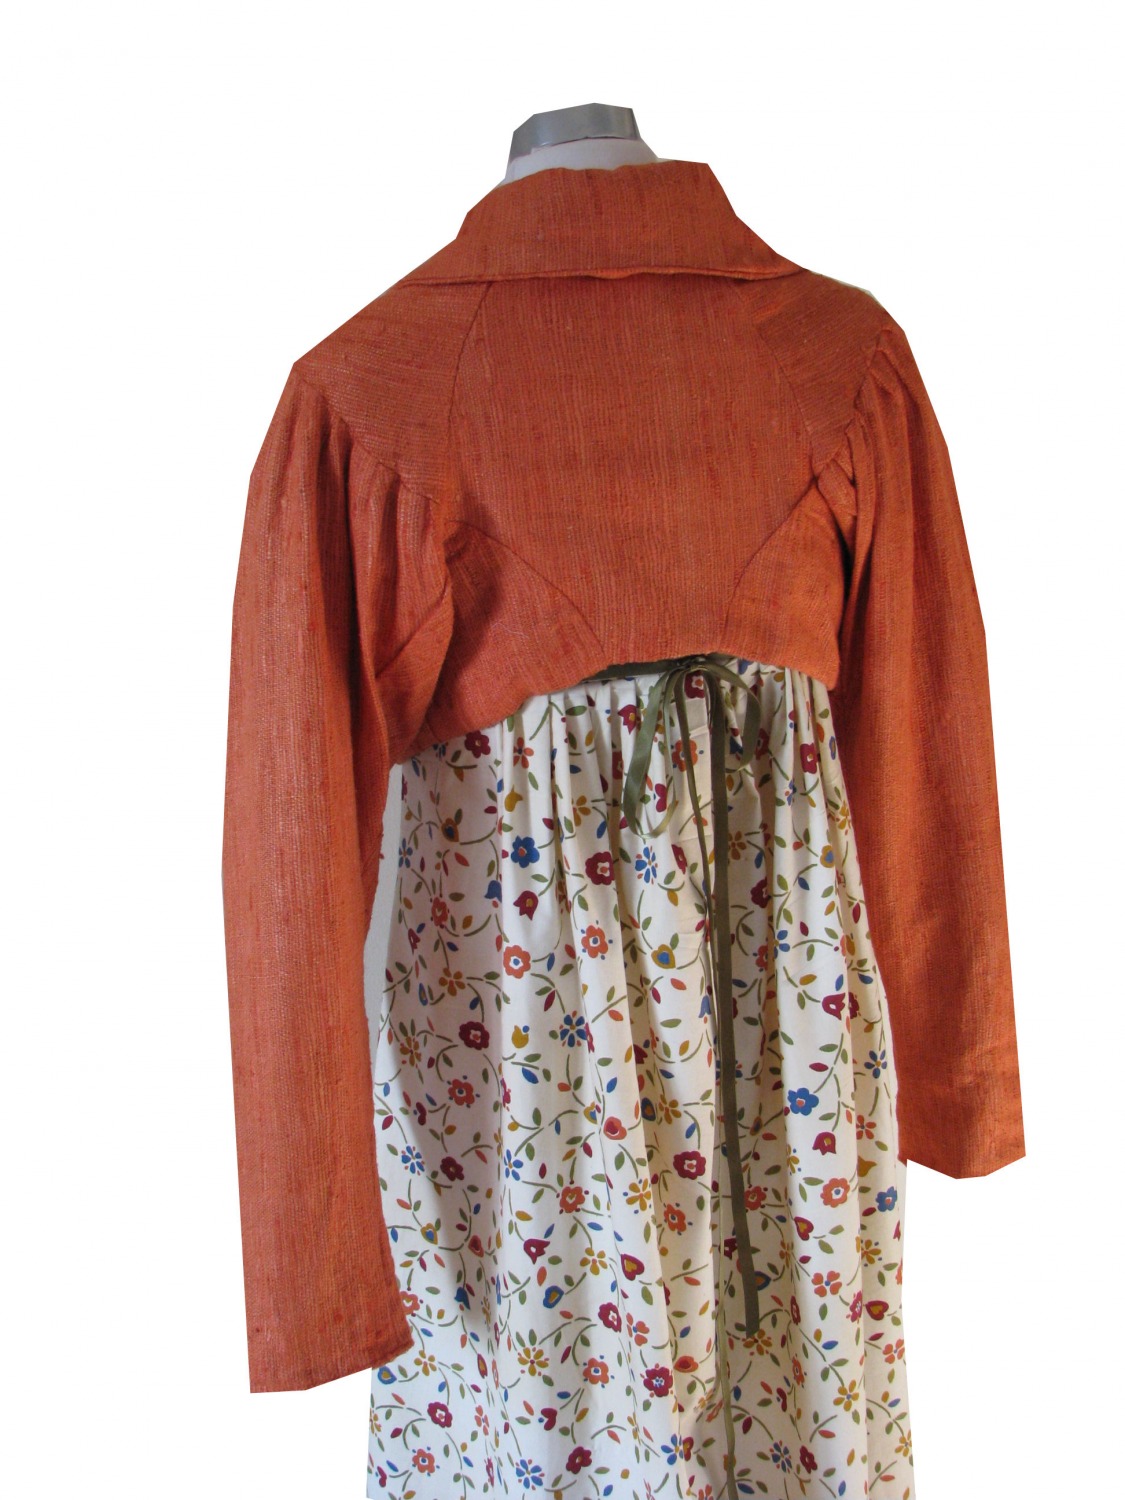 Ladies 19th Century Regency Jane Austen Costume Size 10 - 12  Image